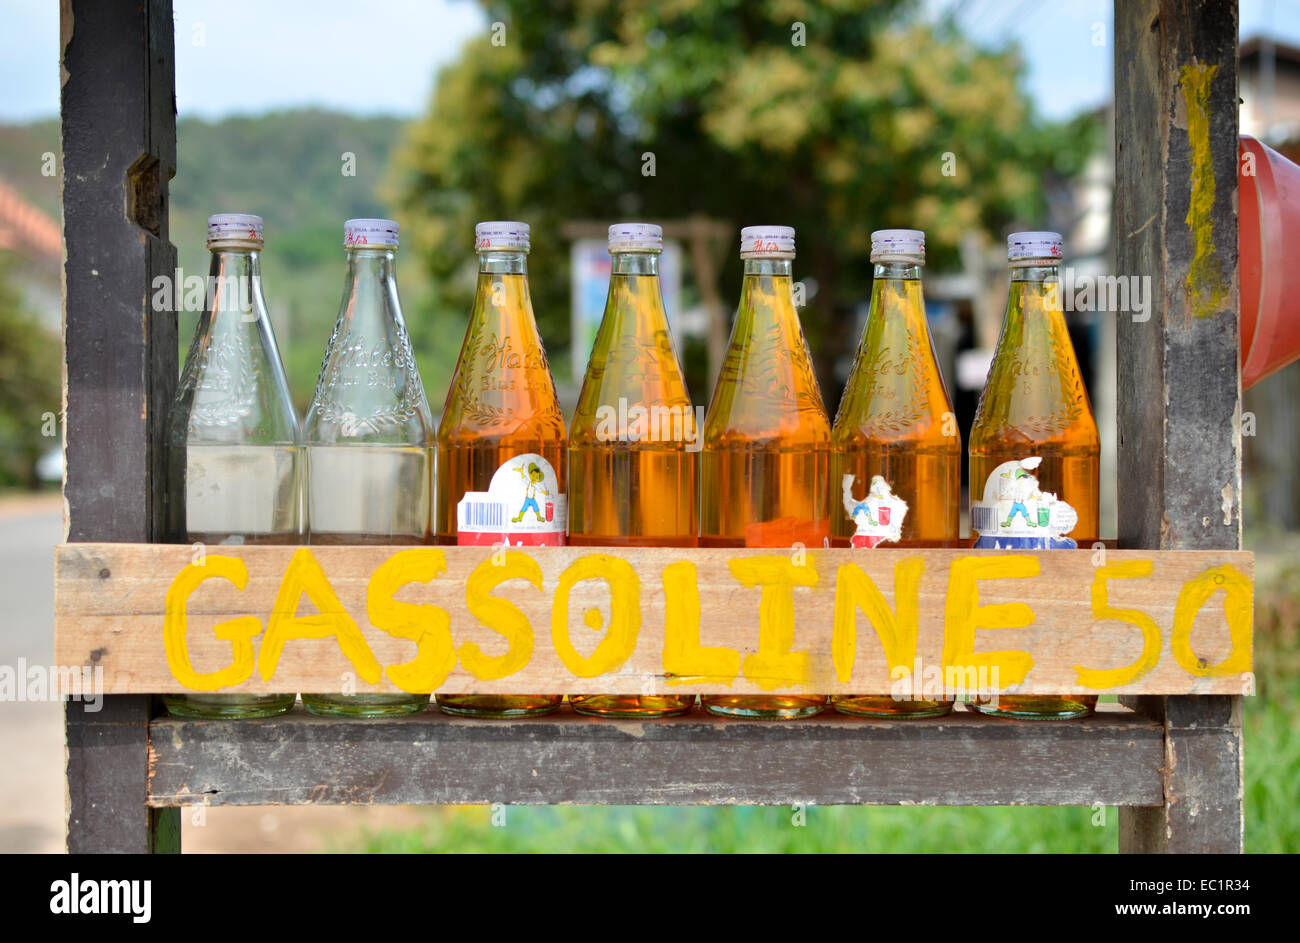 Close-up of gasoline bottles for sale at Thai roadside service station, Koh Lanta, Thailand Stock Photo